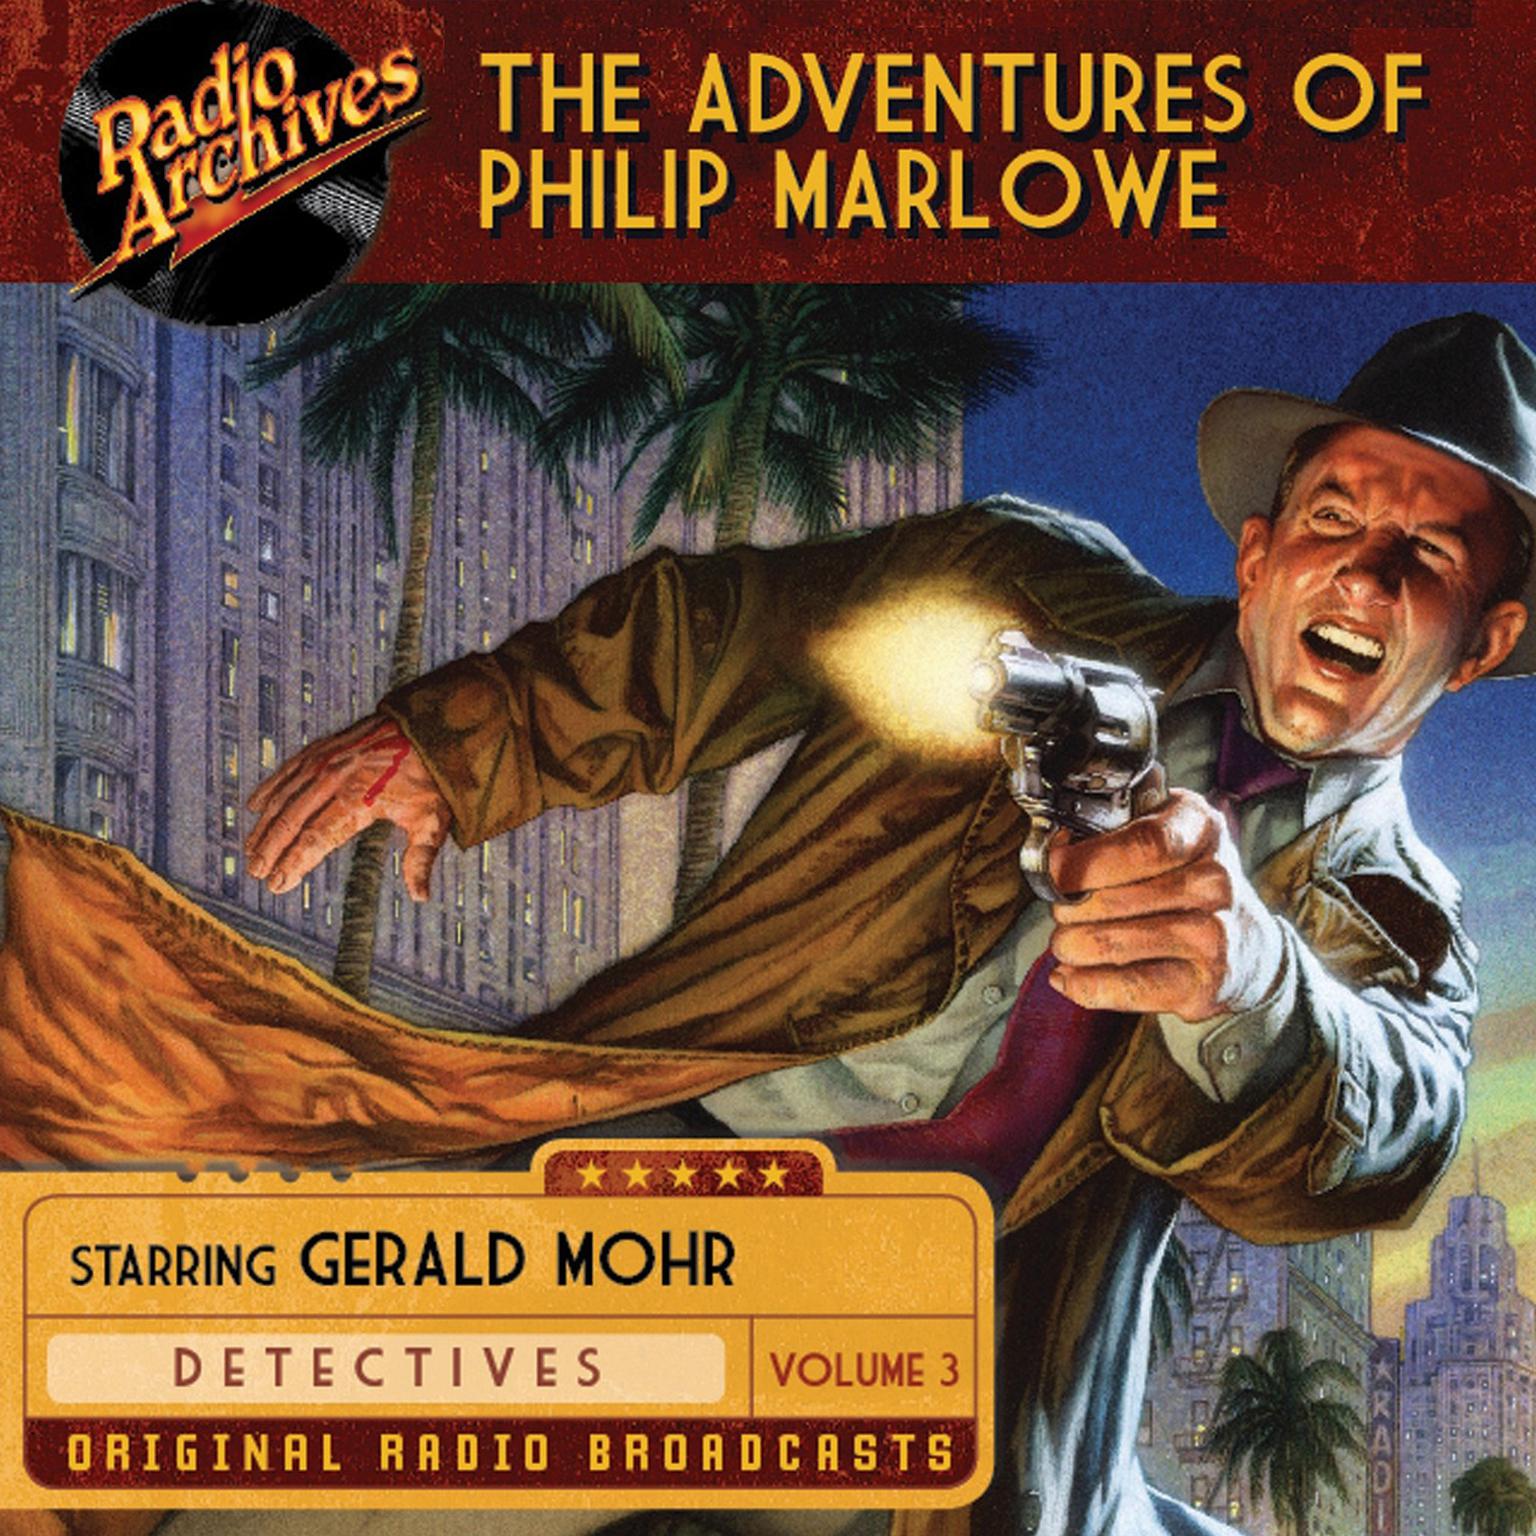 The Adventures of Philip Marlowe,, Volume 3 Audiobook, by Raymond Chandler